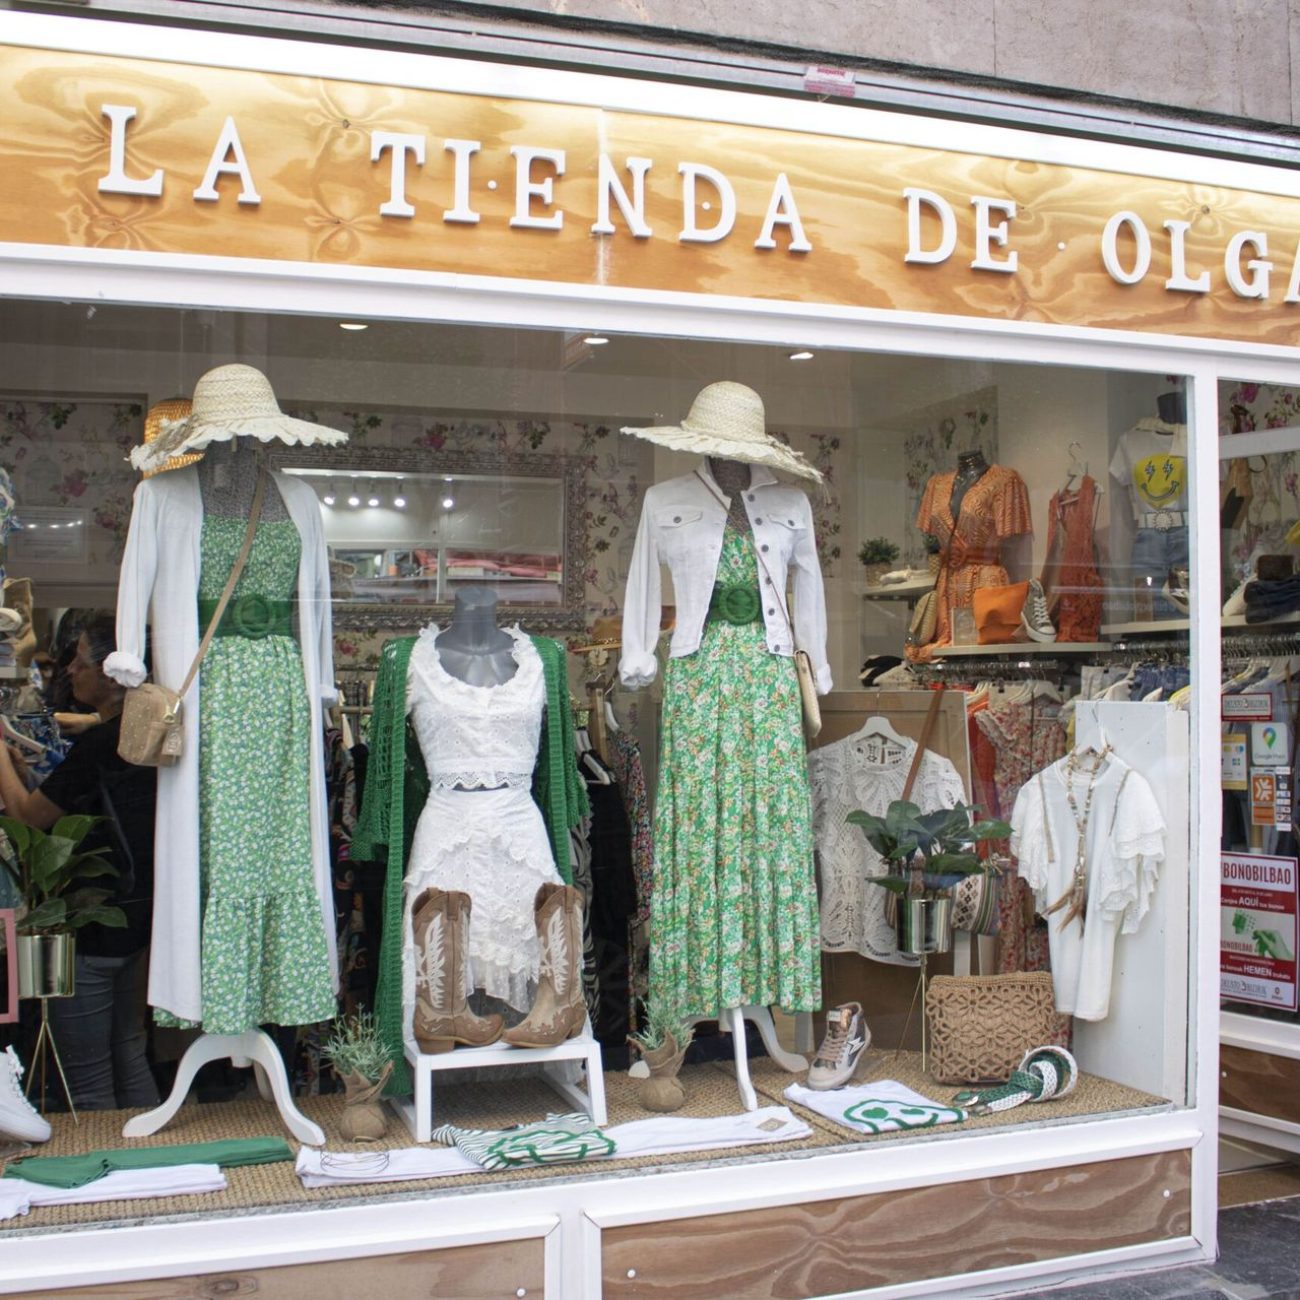 La tienda de Olga en Deusto, Bilbao